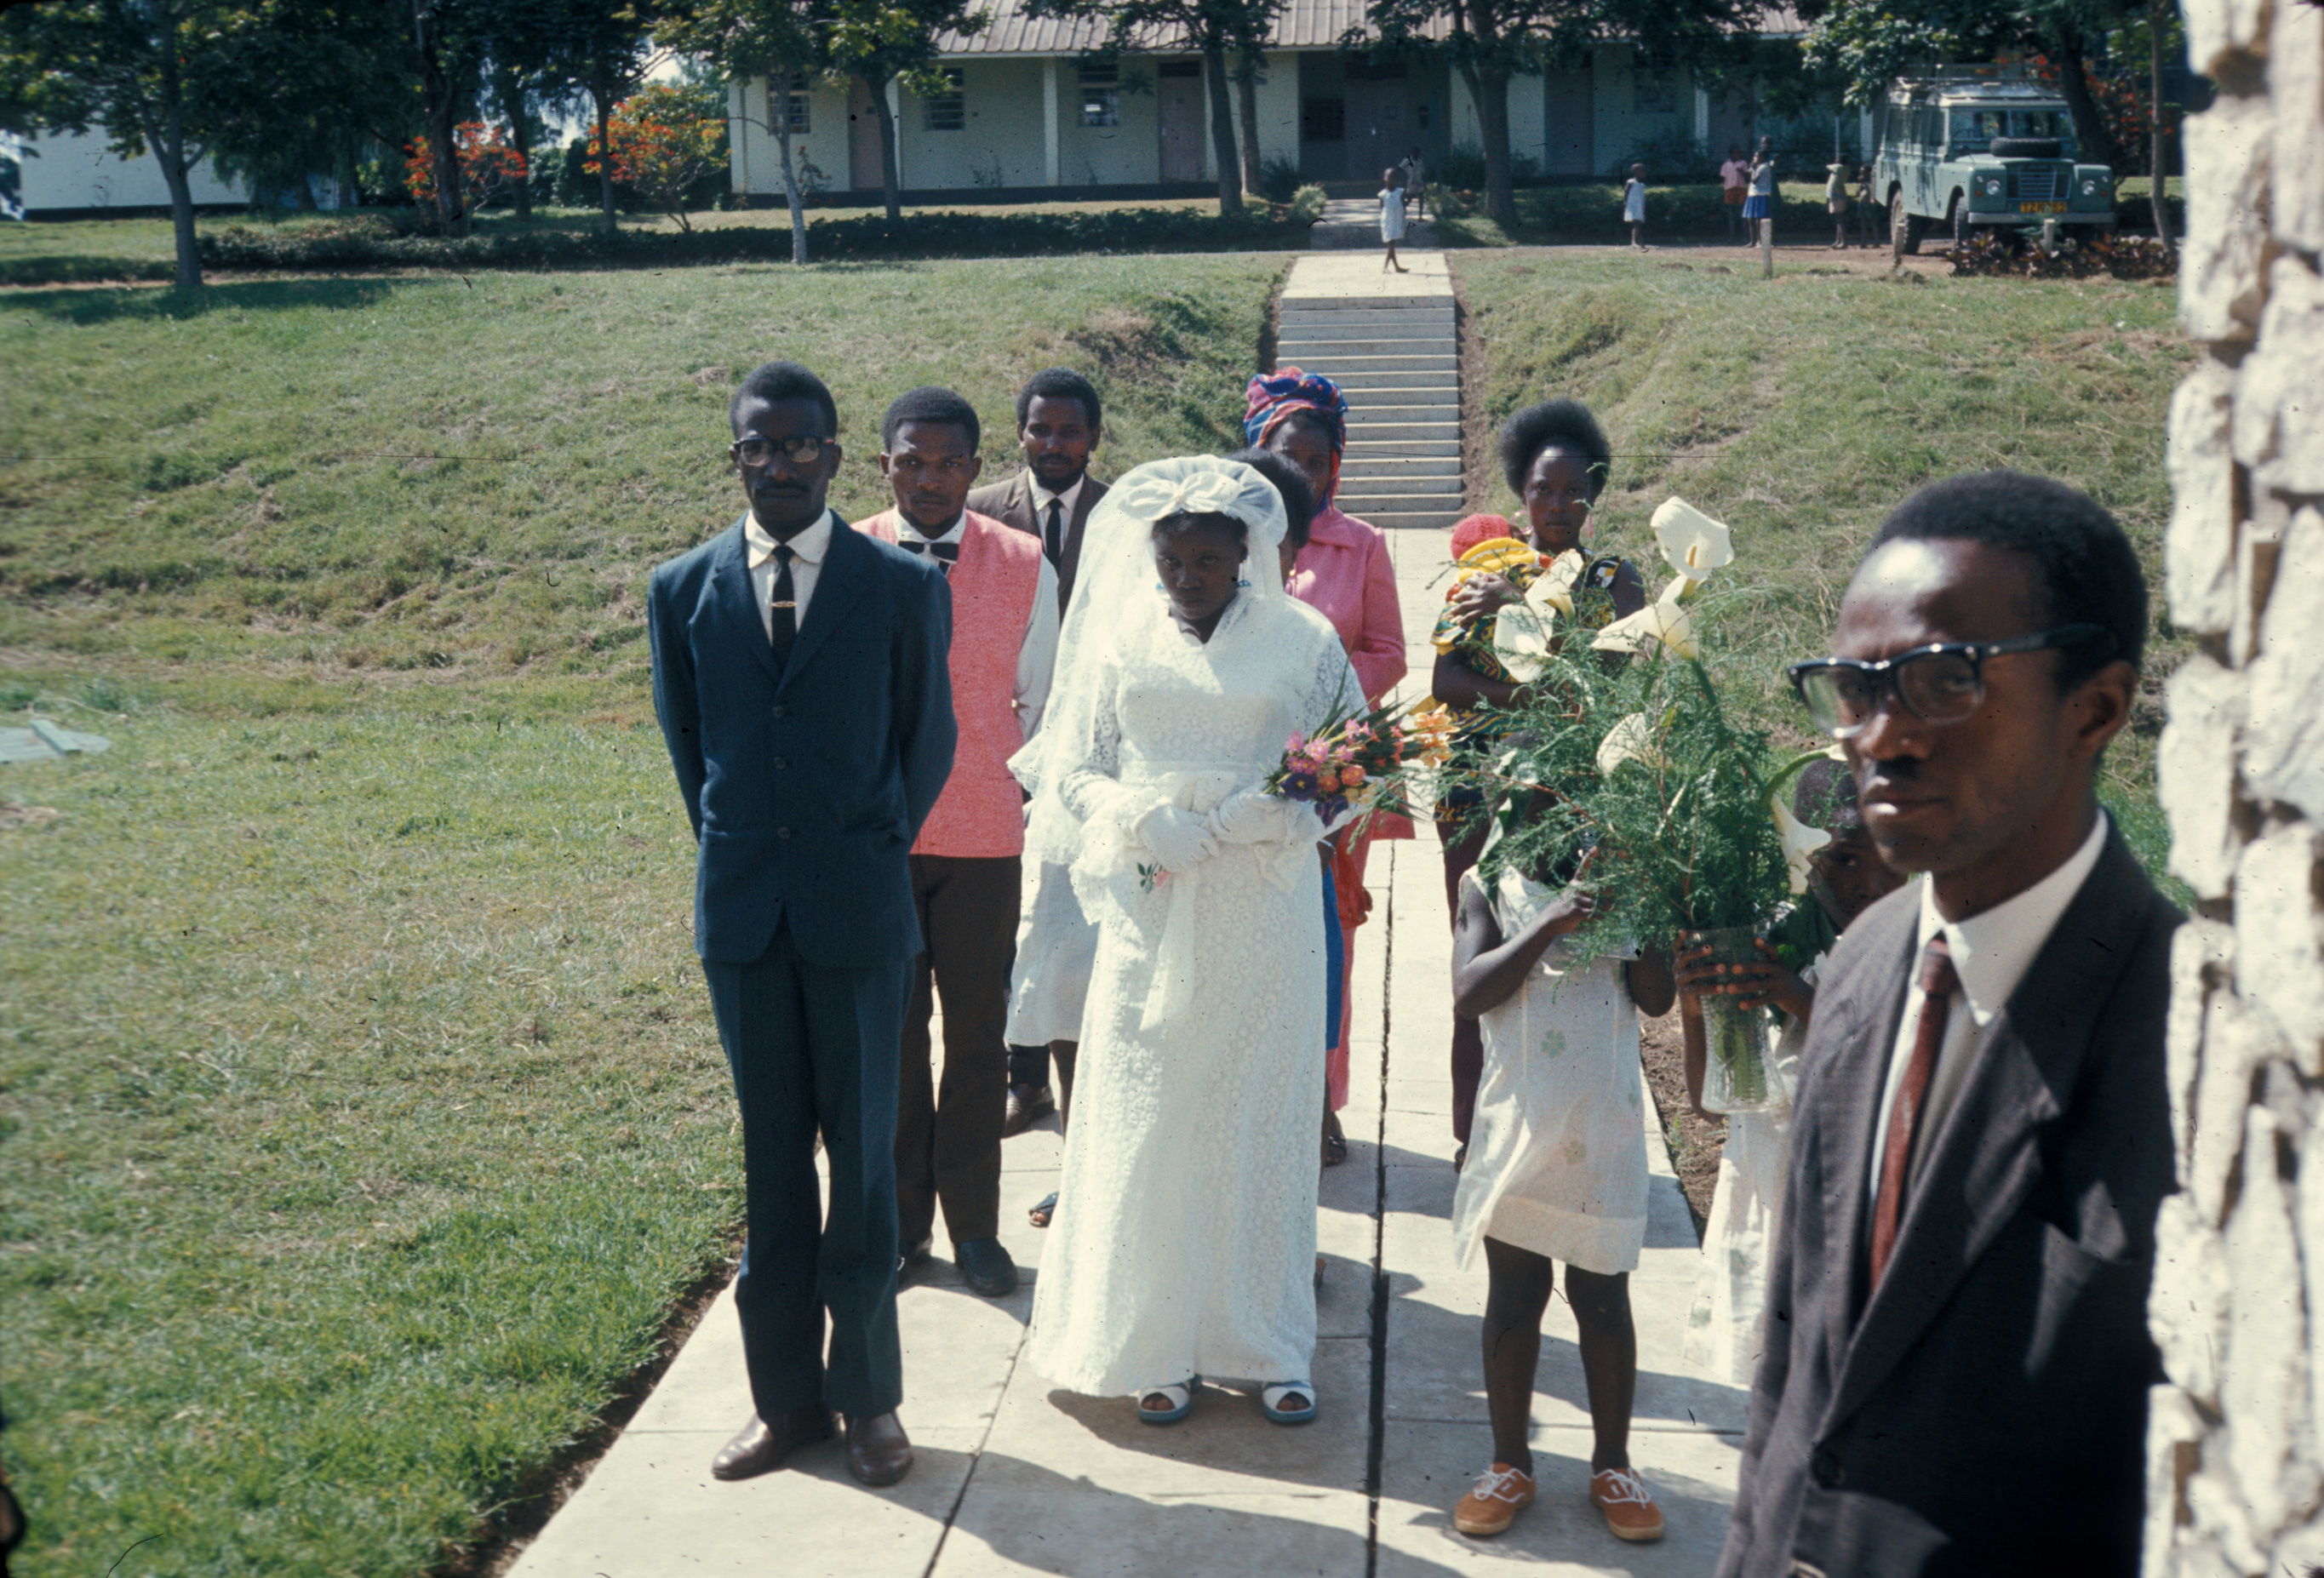 http://jrandomimage.com/images/tanzania-1974-005.jpg